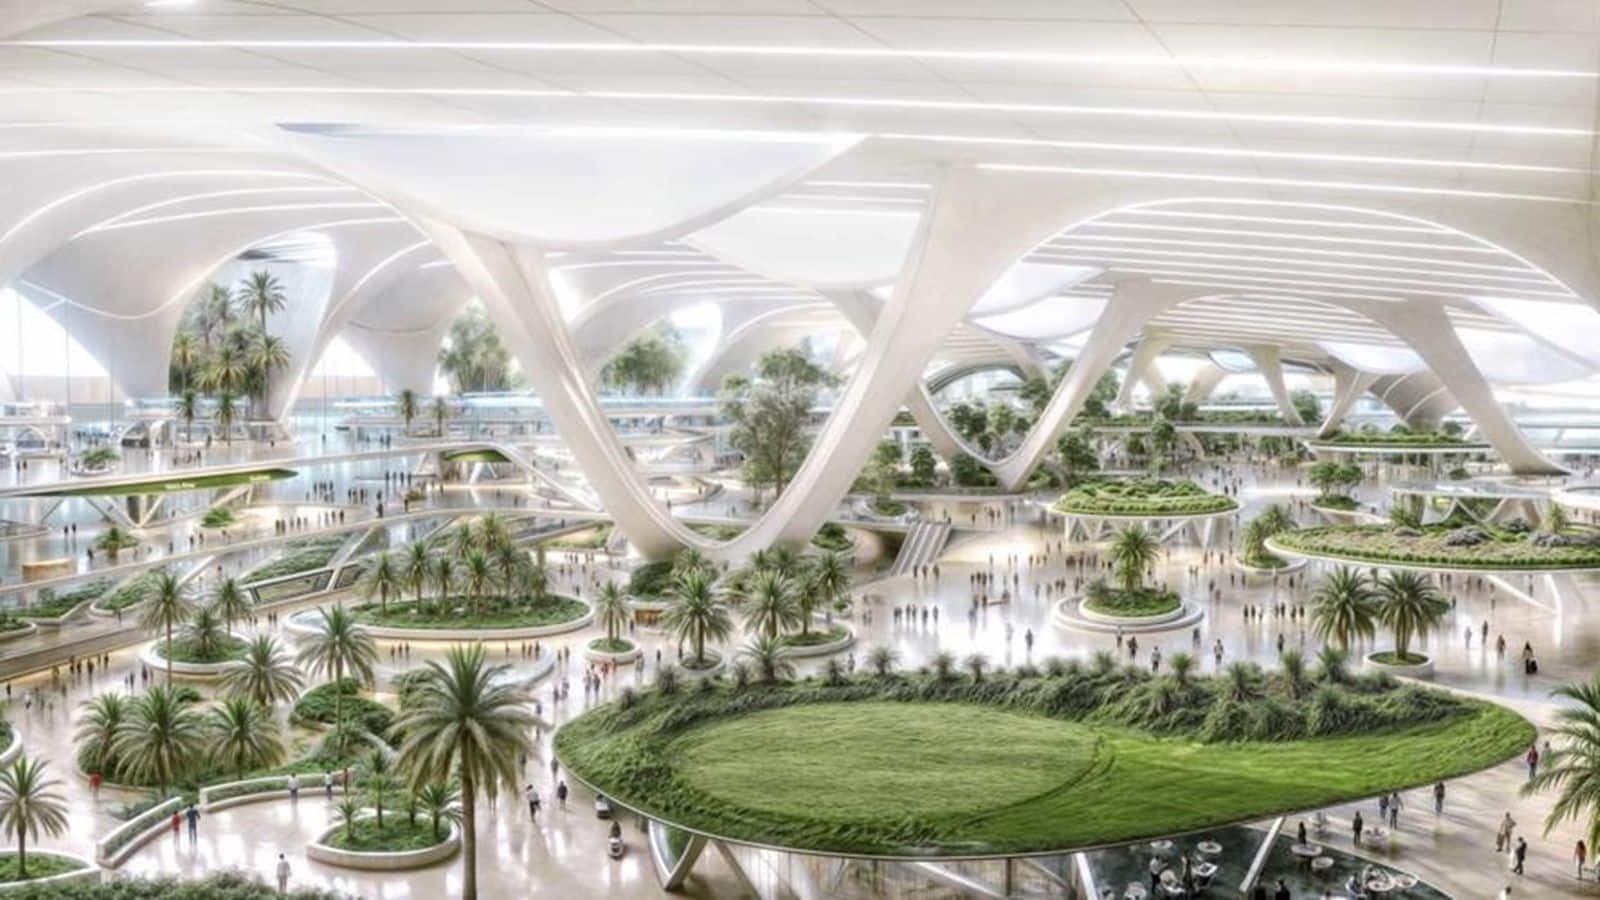 260 million passengers, 400 aircraft gates: Dubai's new $35B airport 